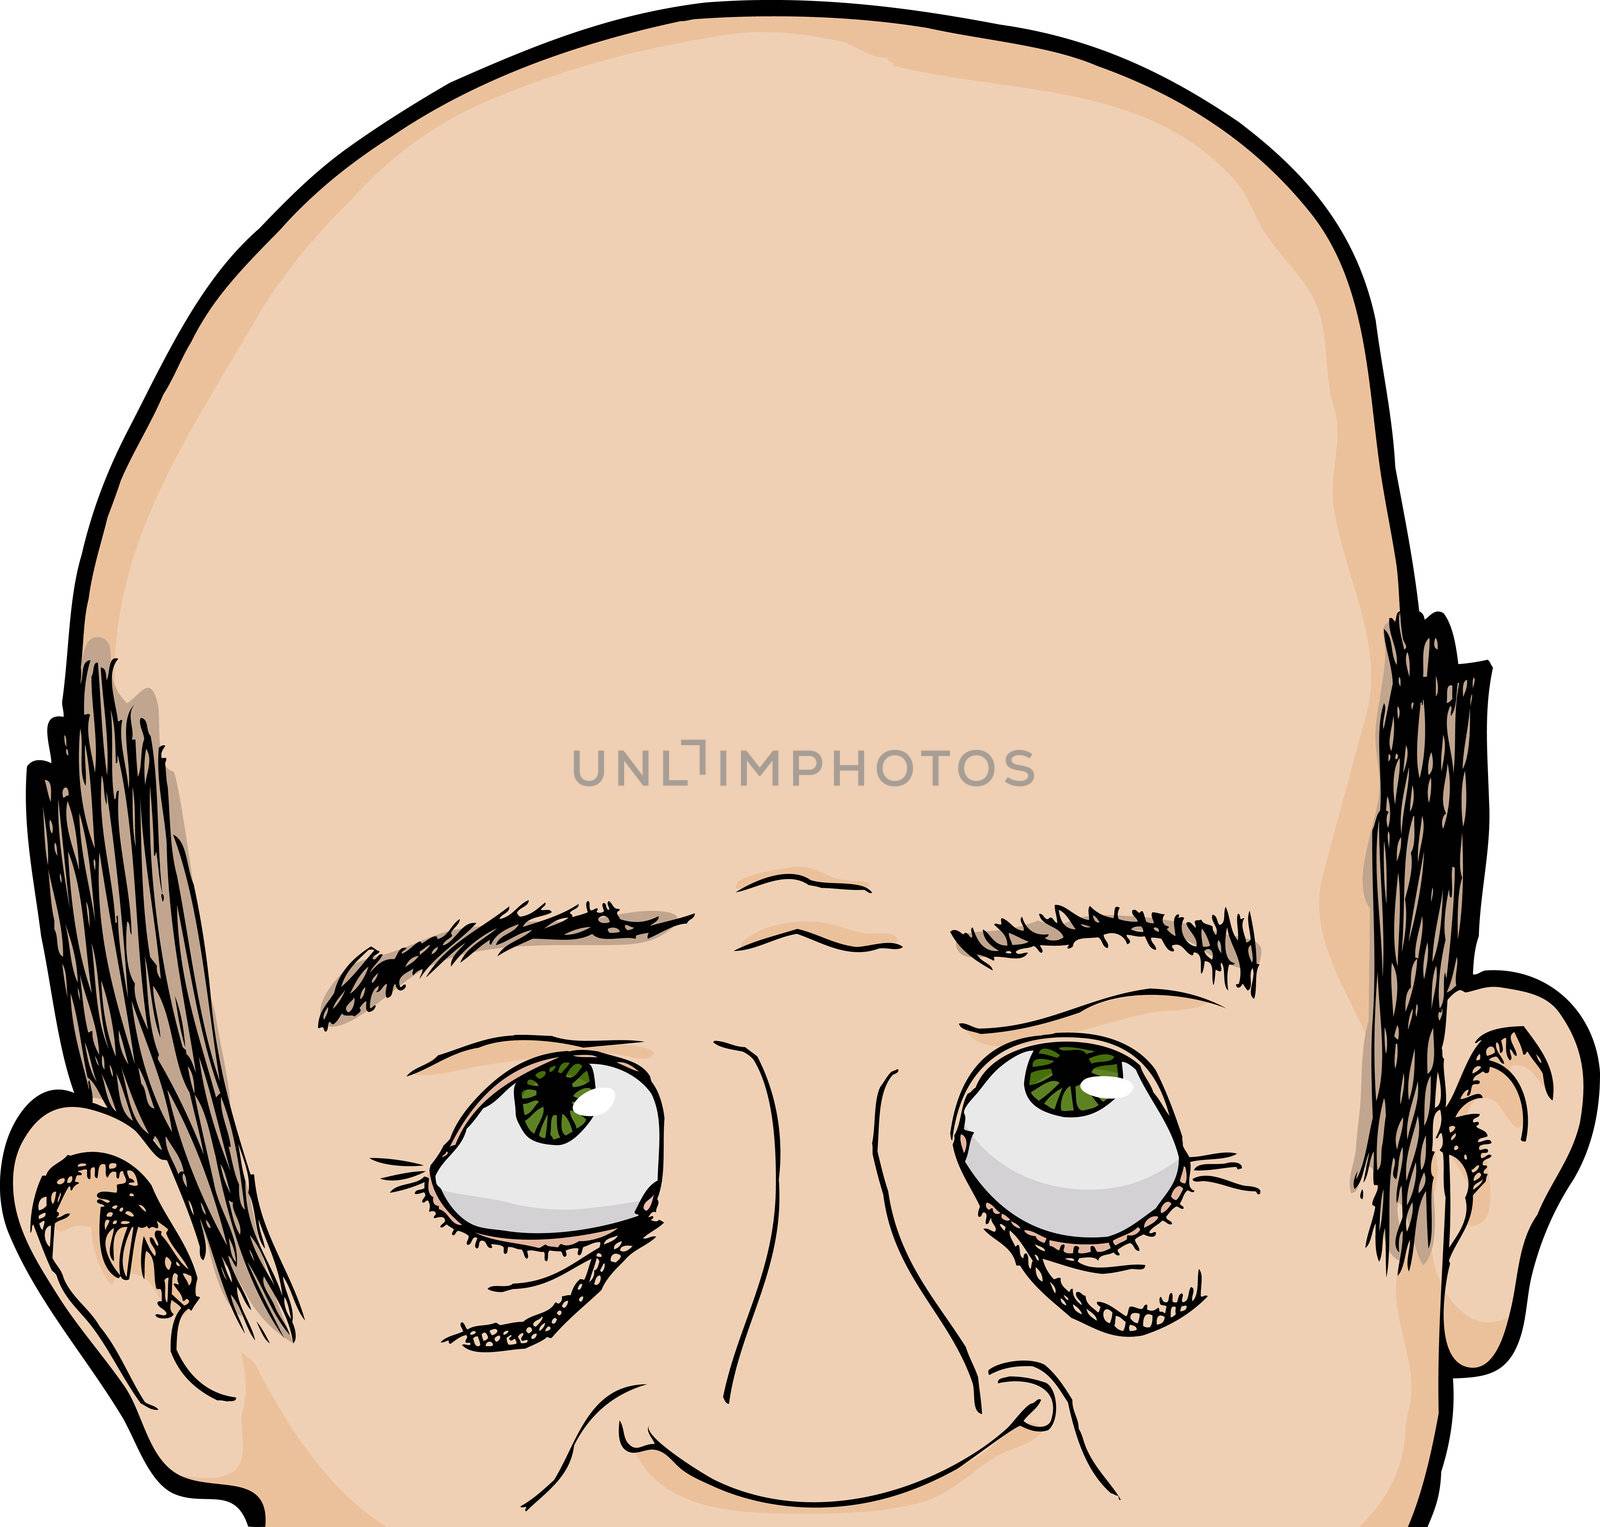 Bald Man Looks Up by TheBlackRhino